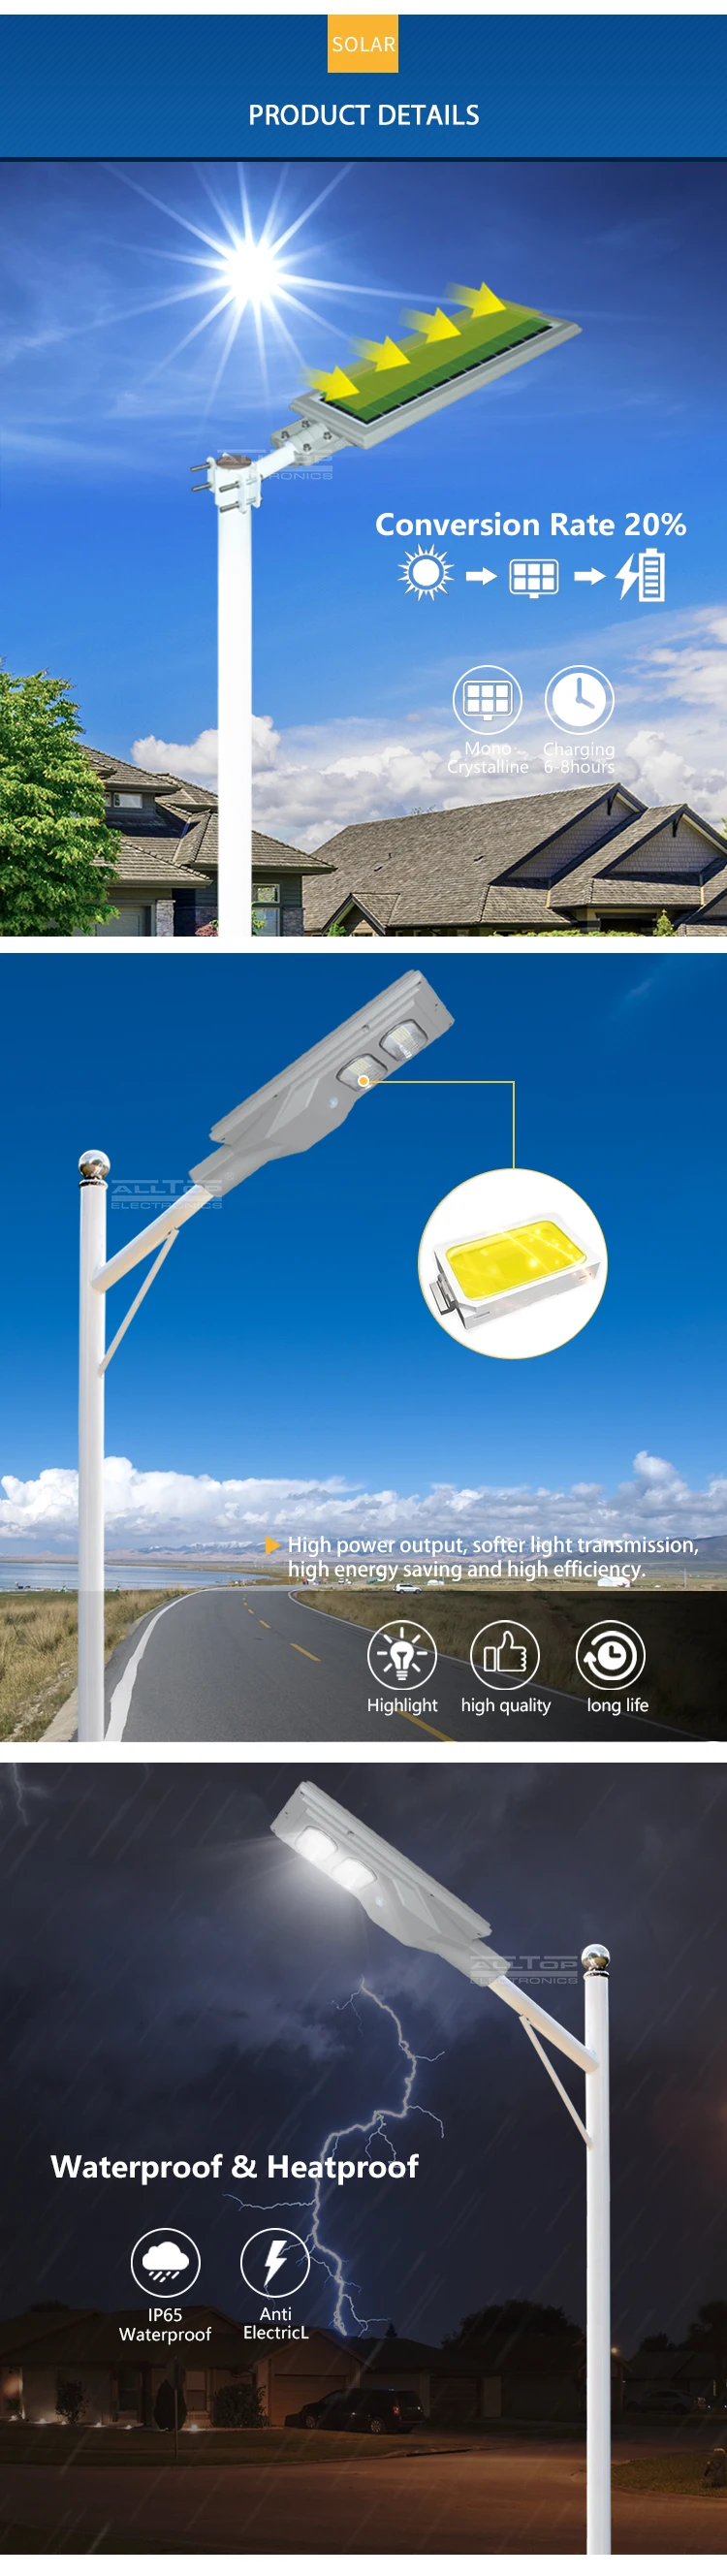 ALLTOP China factory solar energy motion sensor panel bollard light 30w 60w 90w 120w 150w all in one solar led street light